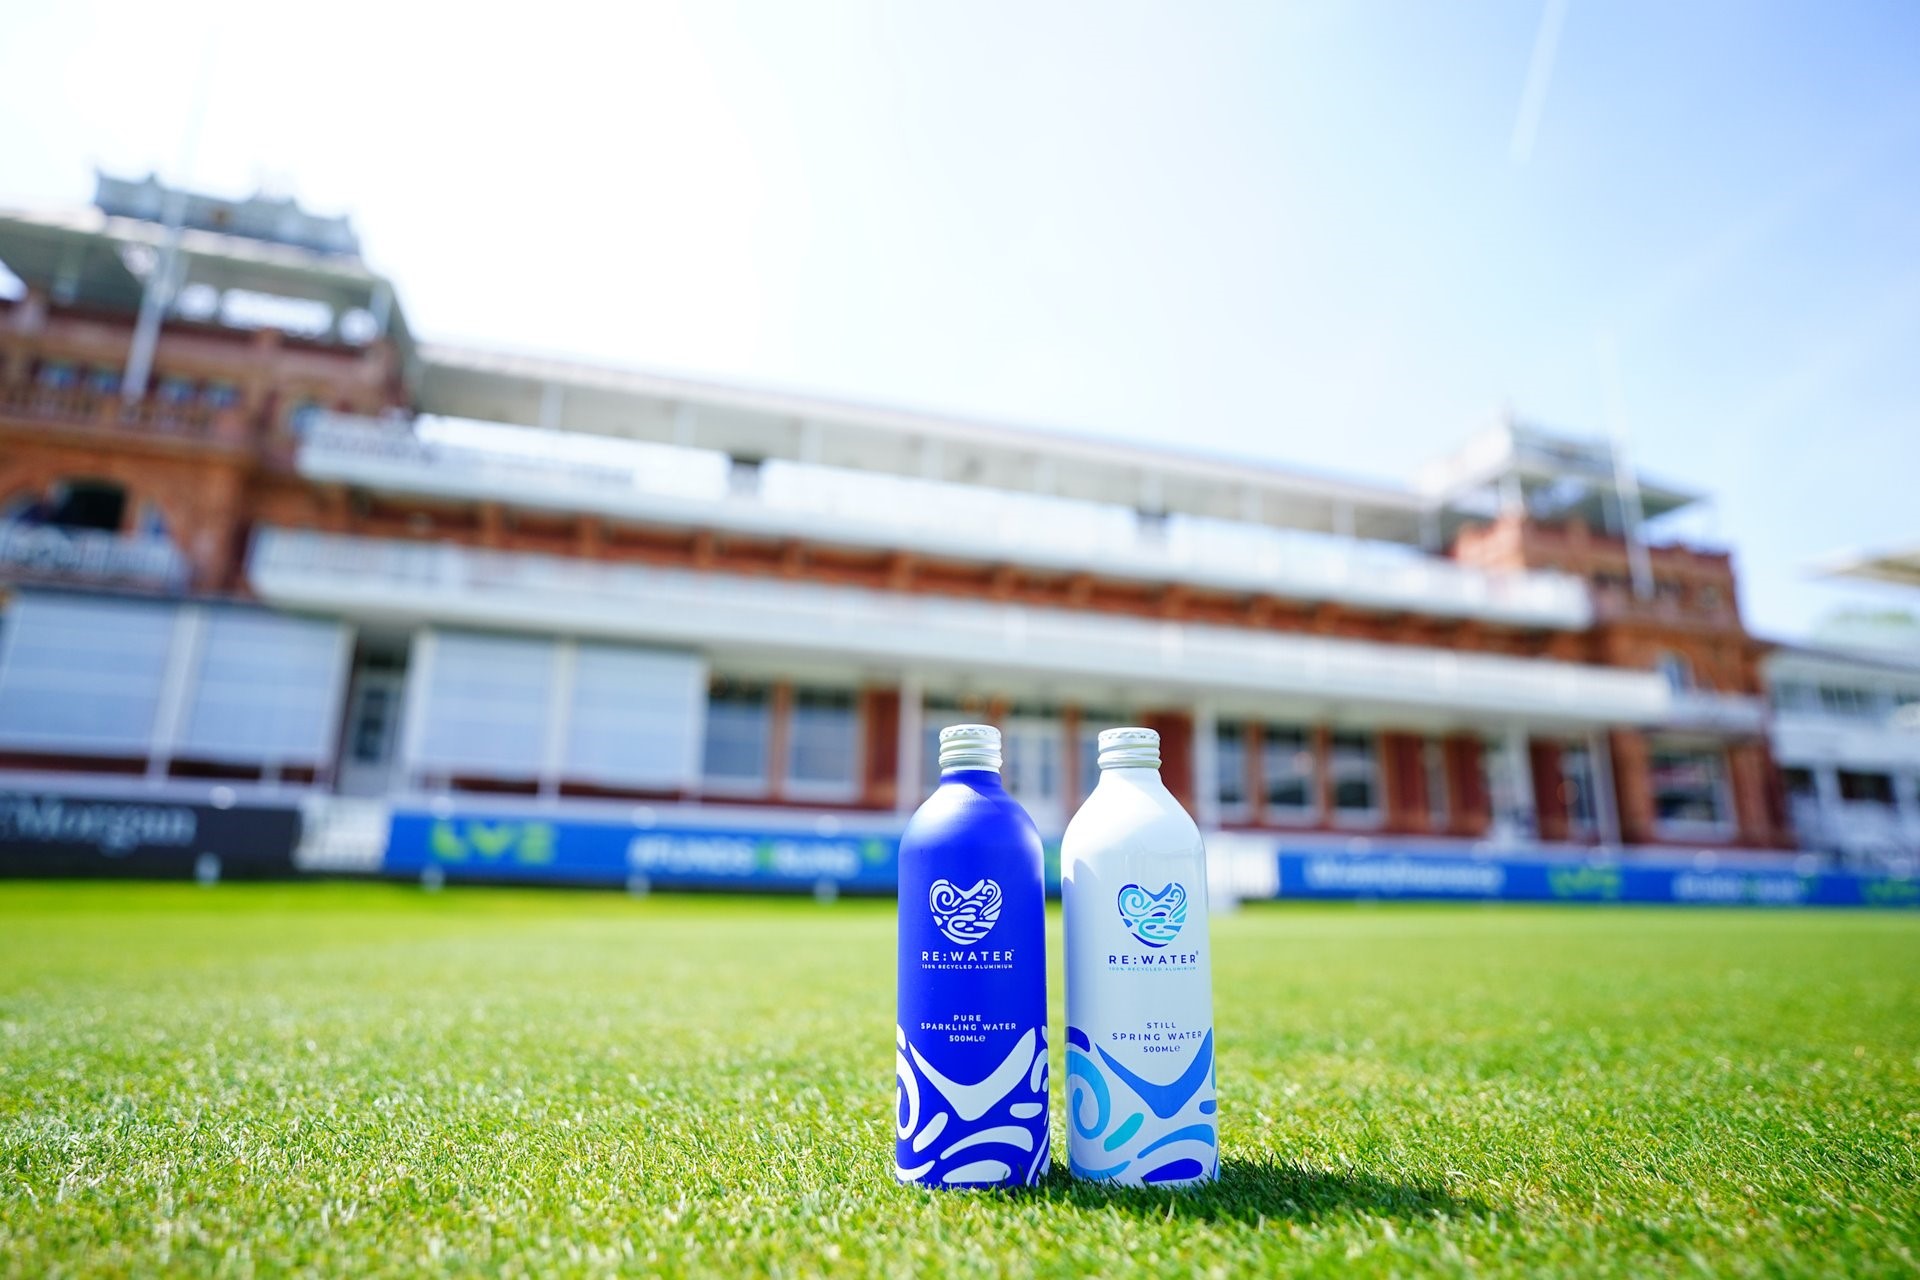 Re:Water aluminium bottles to mark its entry into Marylebone Cricket Club